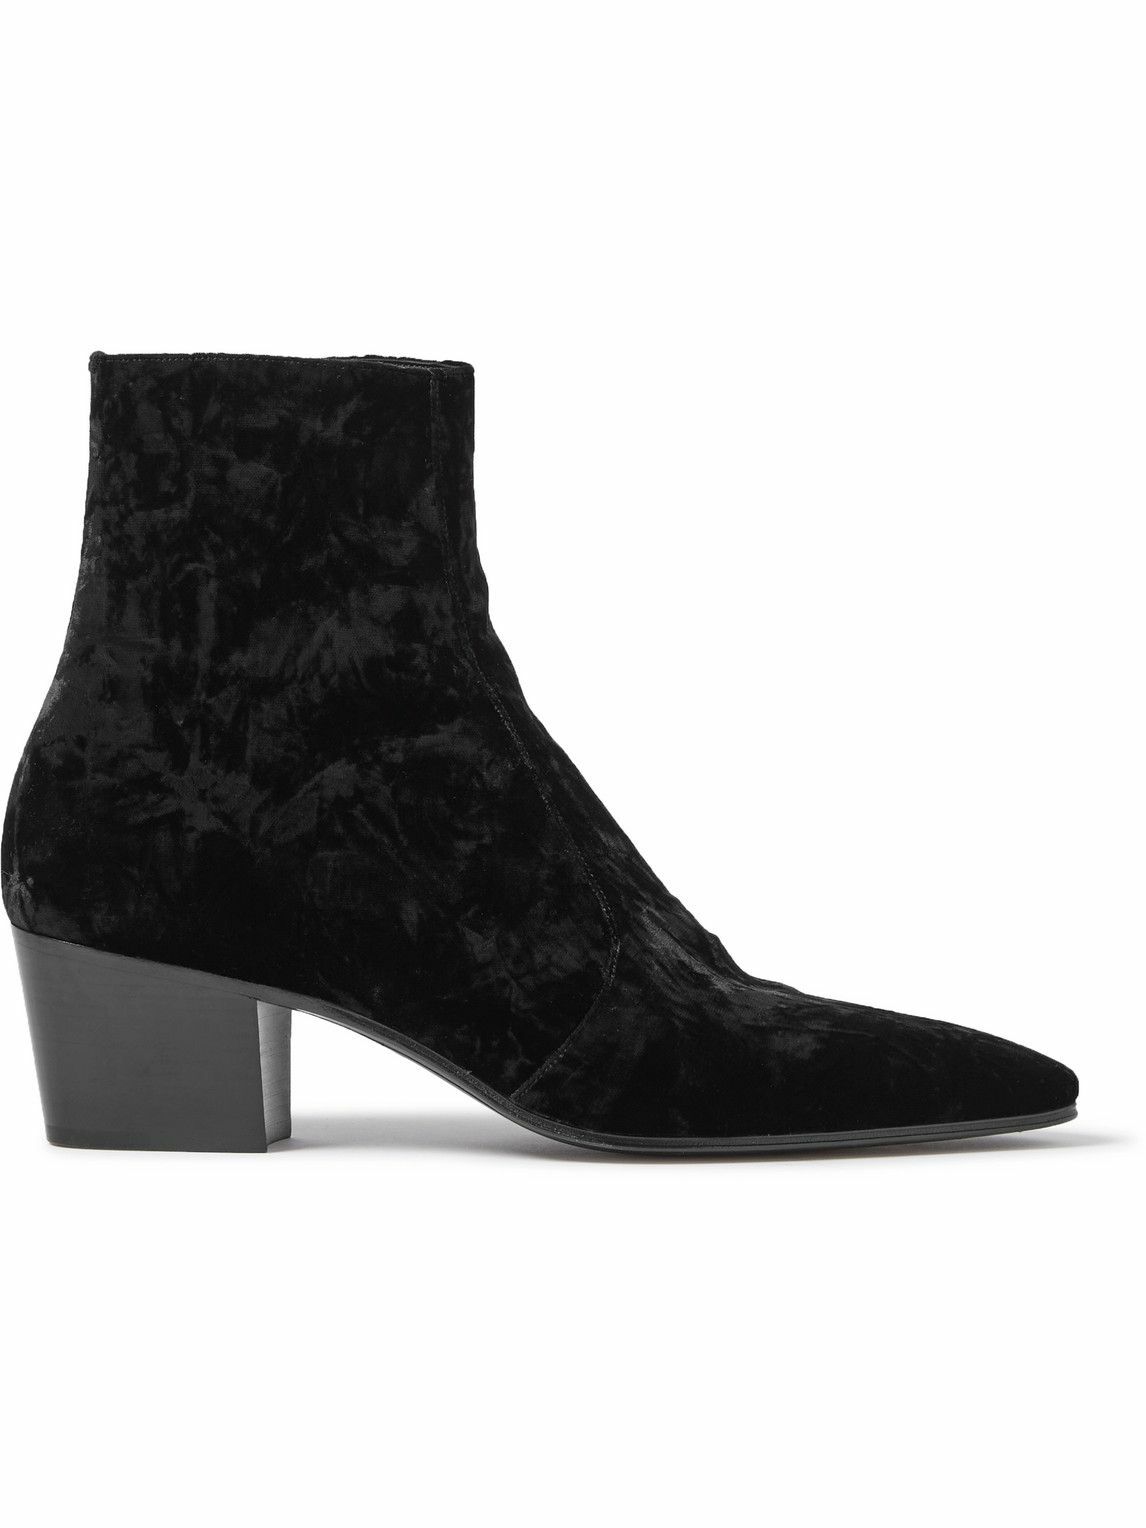 Photo: SAINT LAURENT - Velvet Ankle Boots - Black